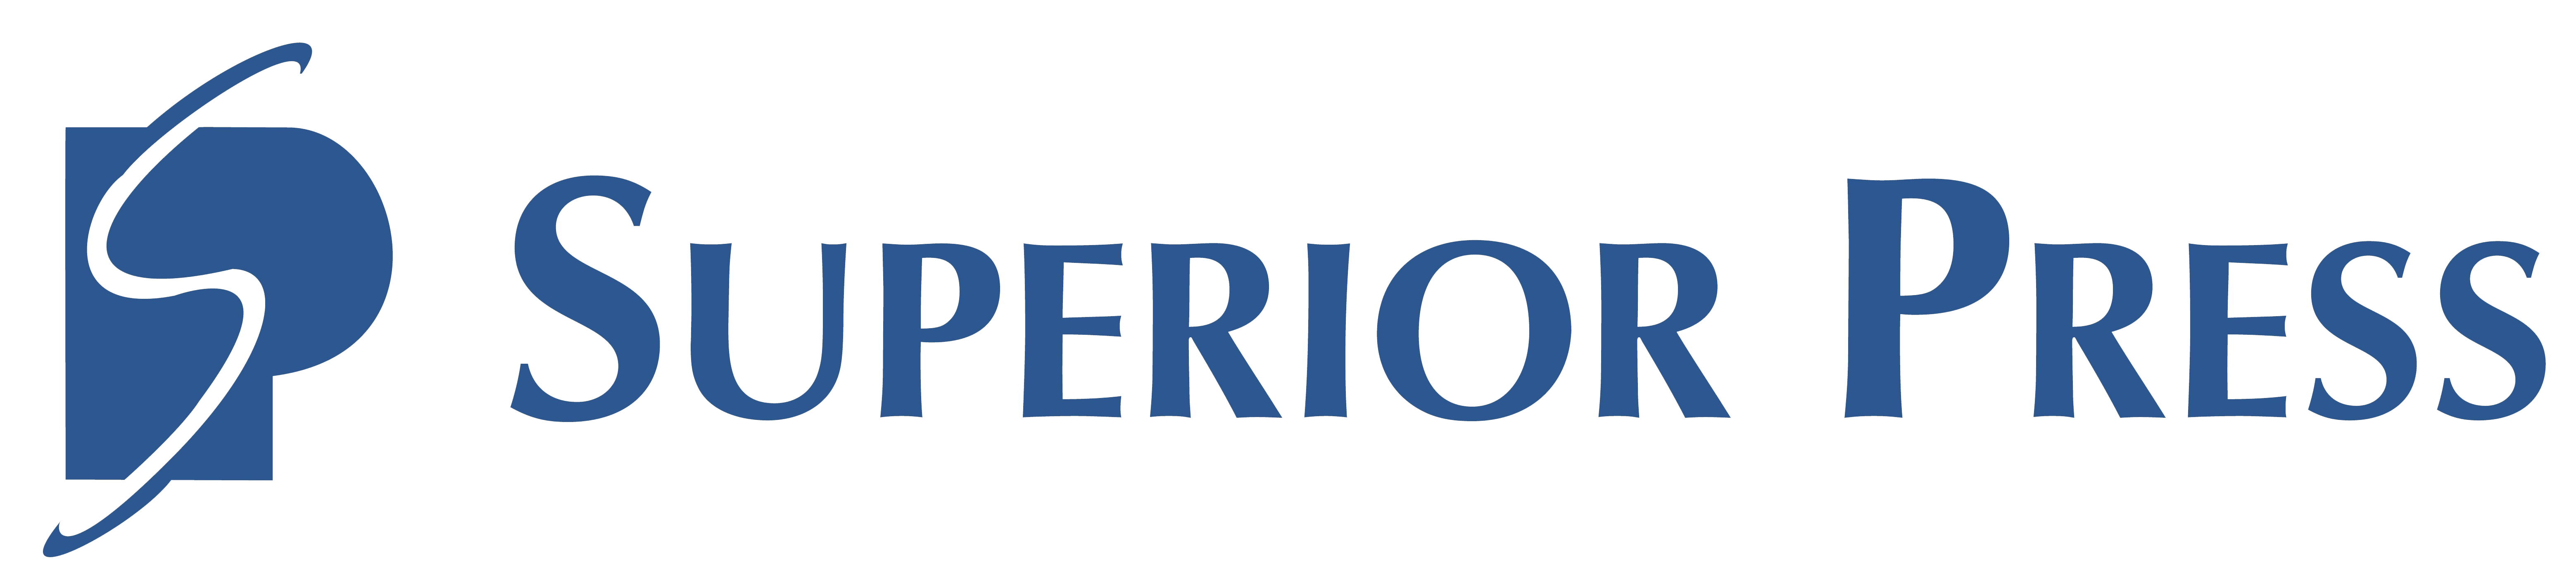 Superior-Press_logo